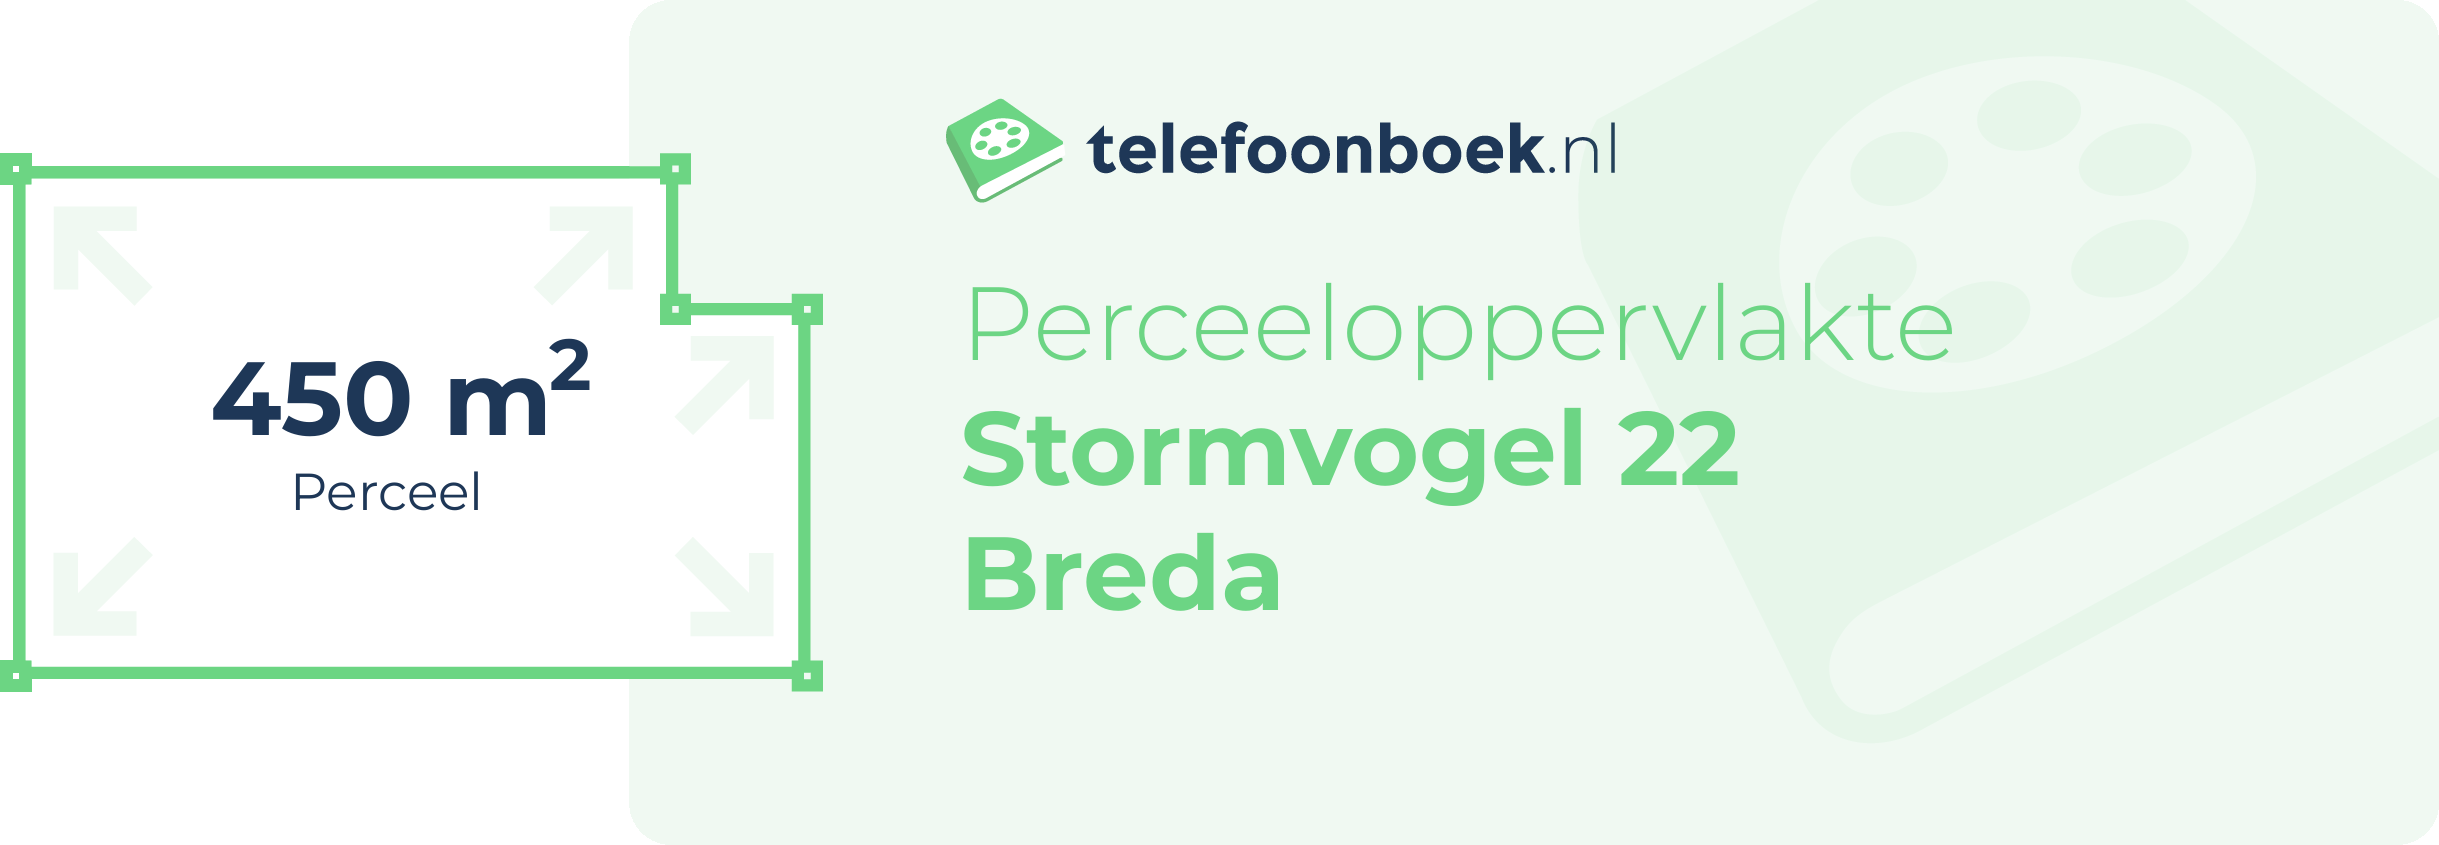 Perceeloppervlakte Stormvogel 22 Breda